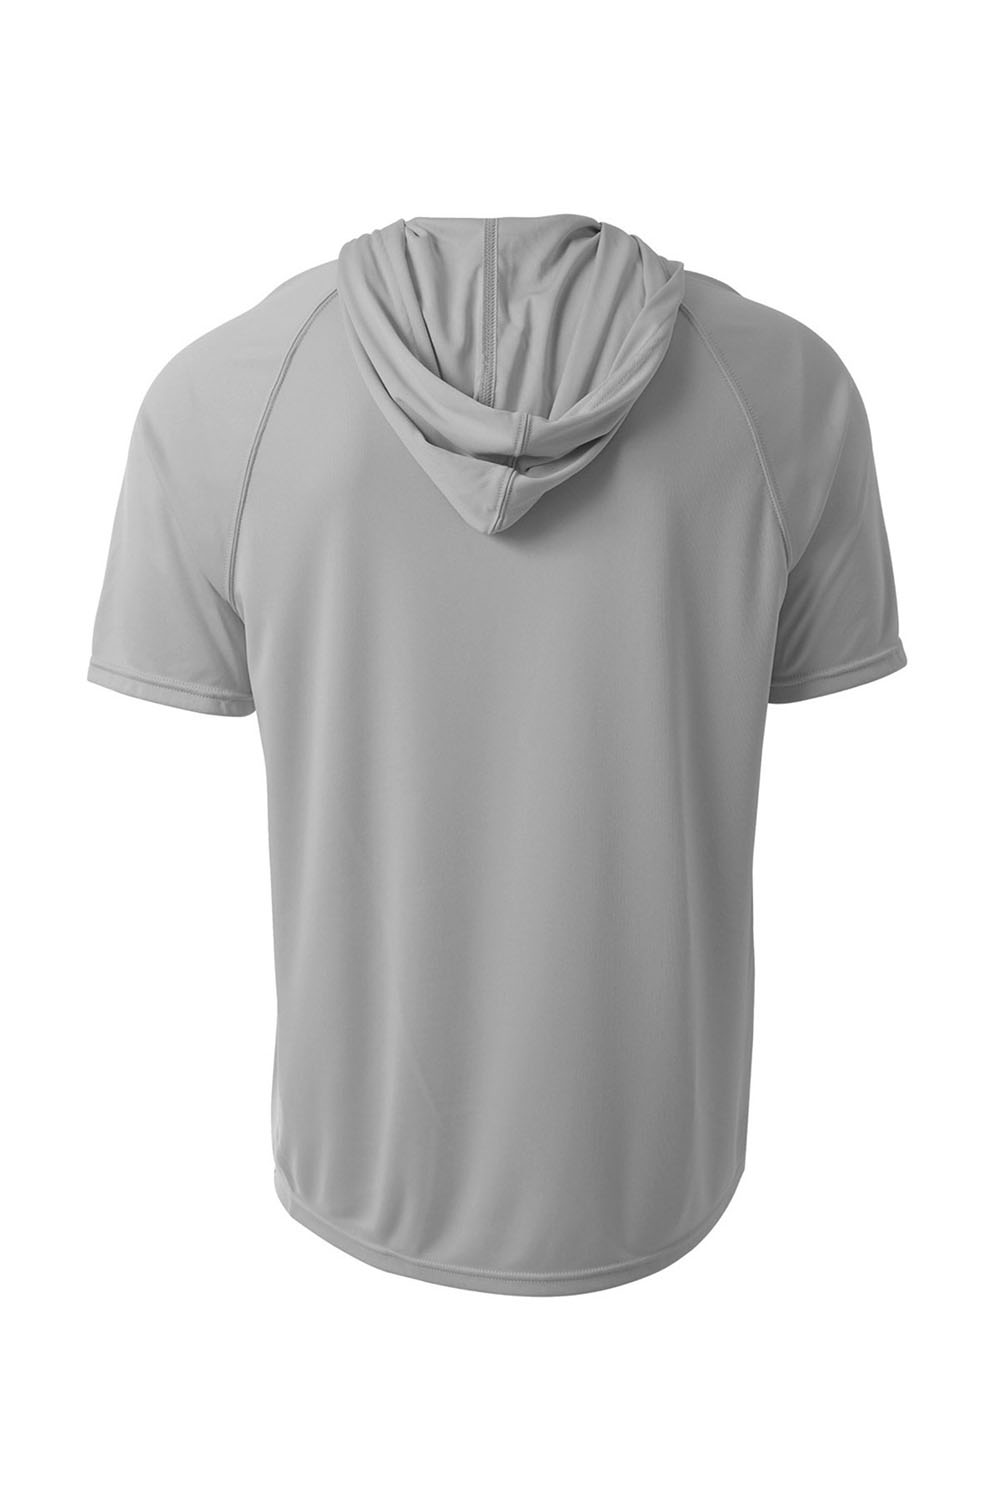 A4 N3408 Mens Performance Moisture Wicking Short Sleeve Hooded T-Shirt Hoodie Silver Grey Flat Back